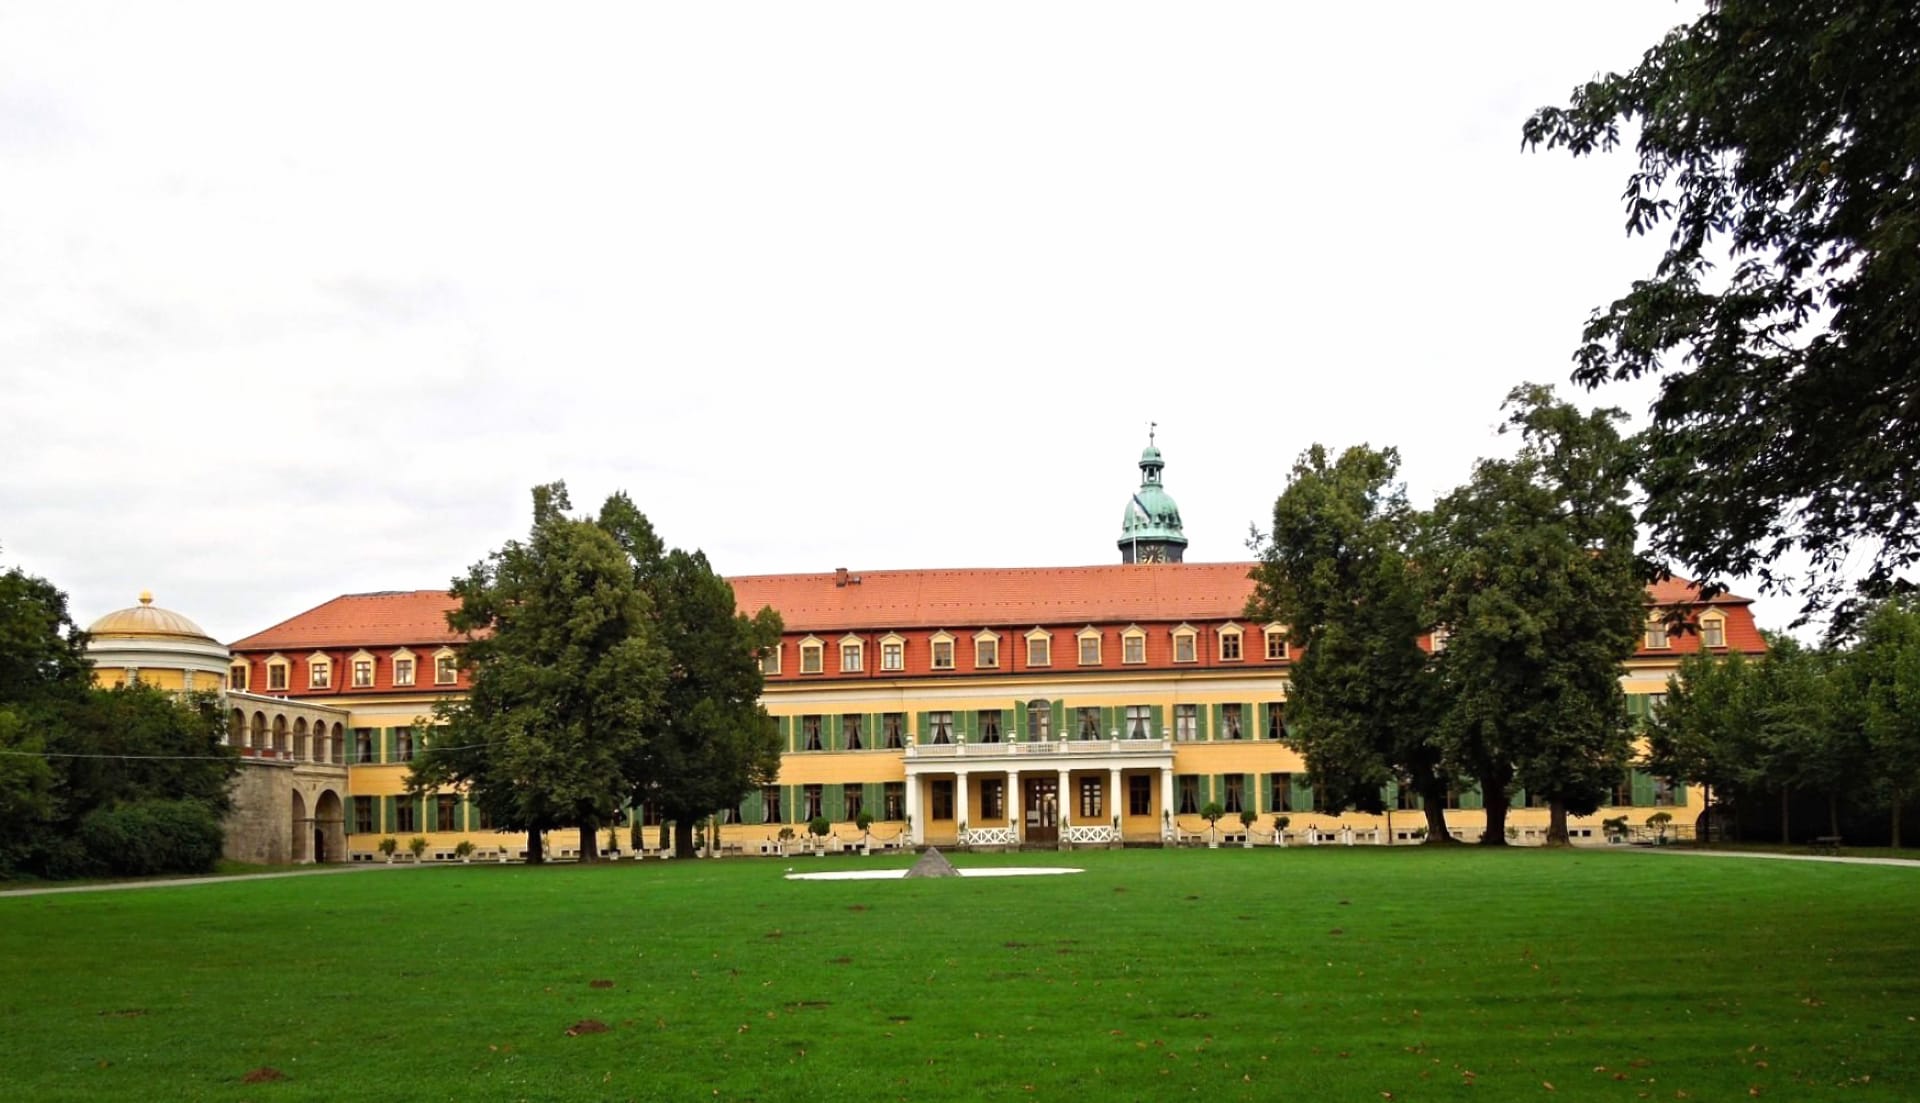 Sondershausen Palace at 1024 x 1024 iPad size wallpapers HD quality